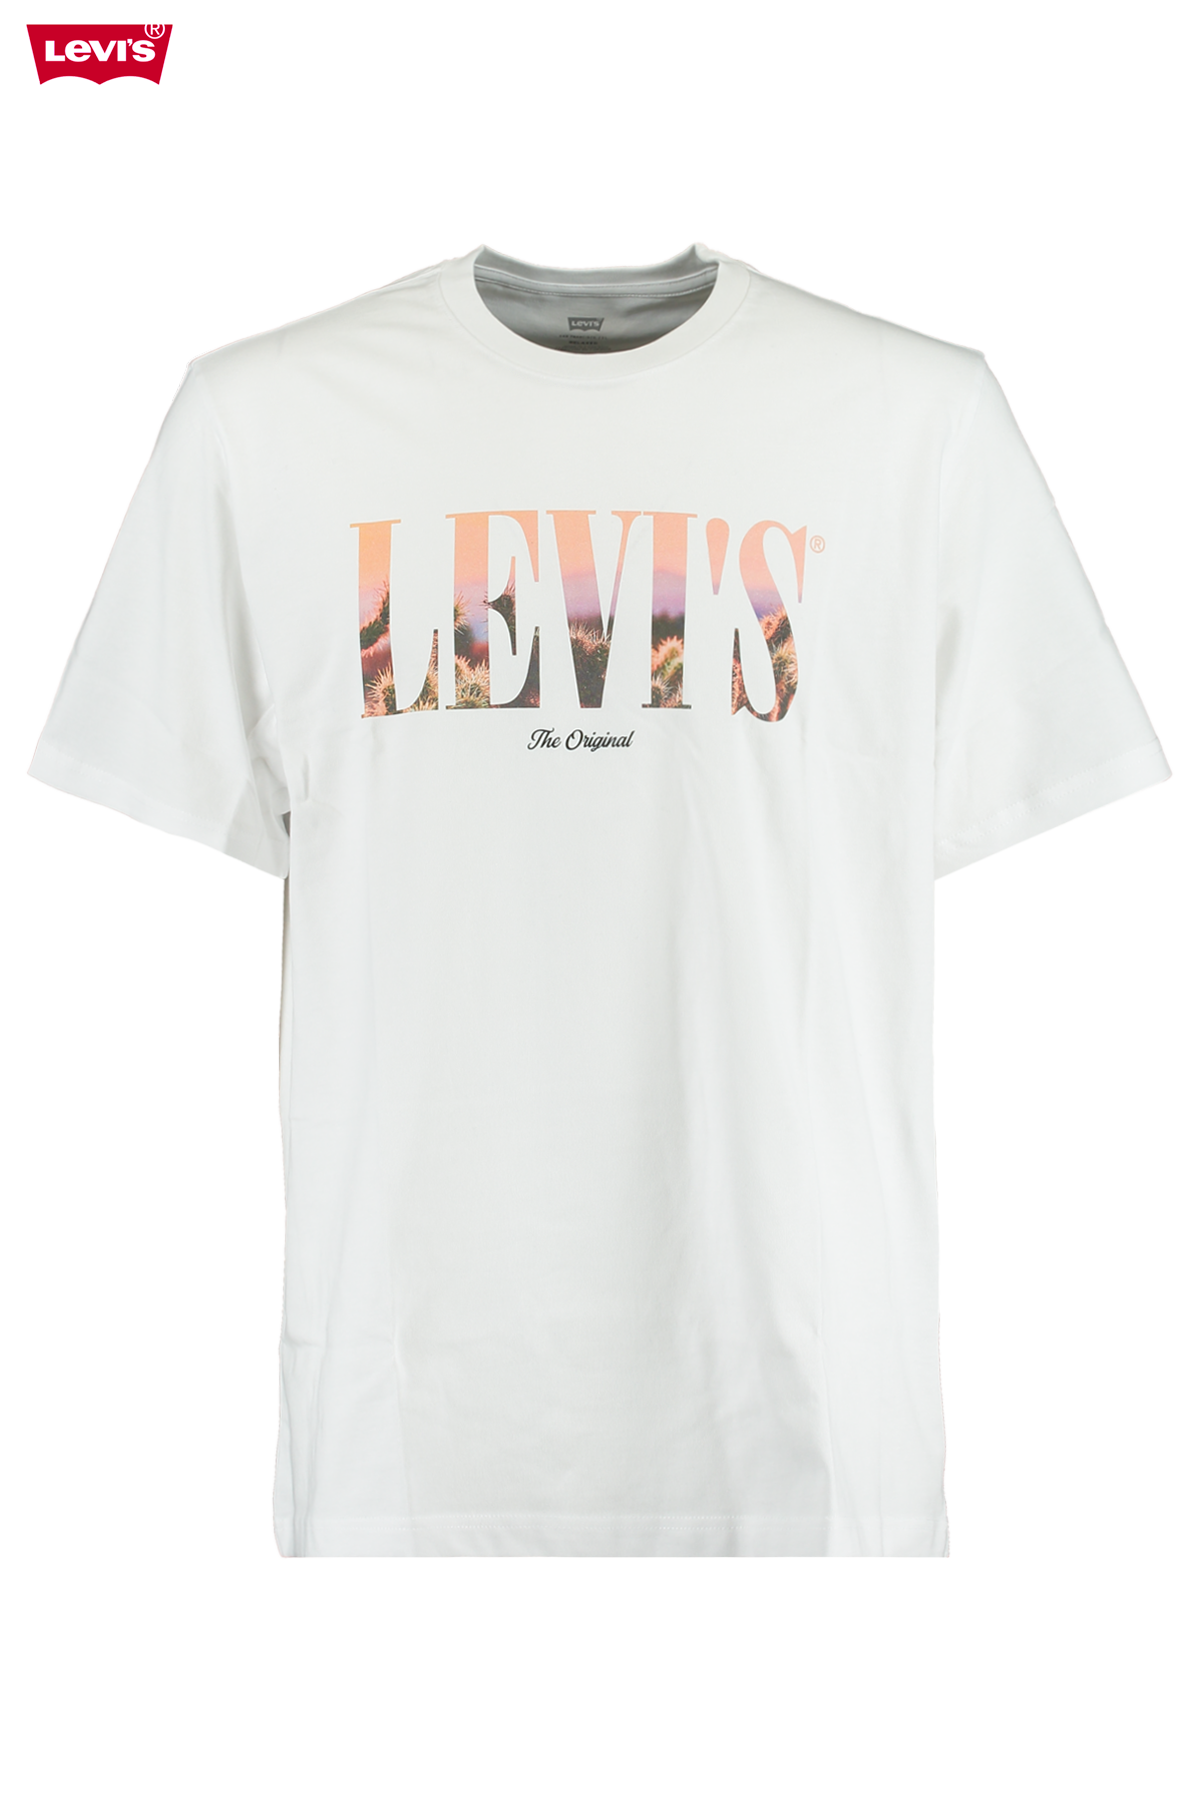 levis tshirt online